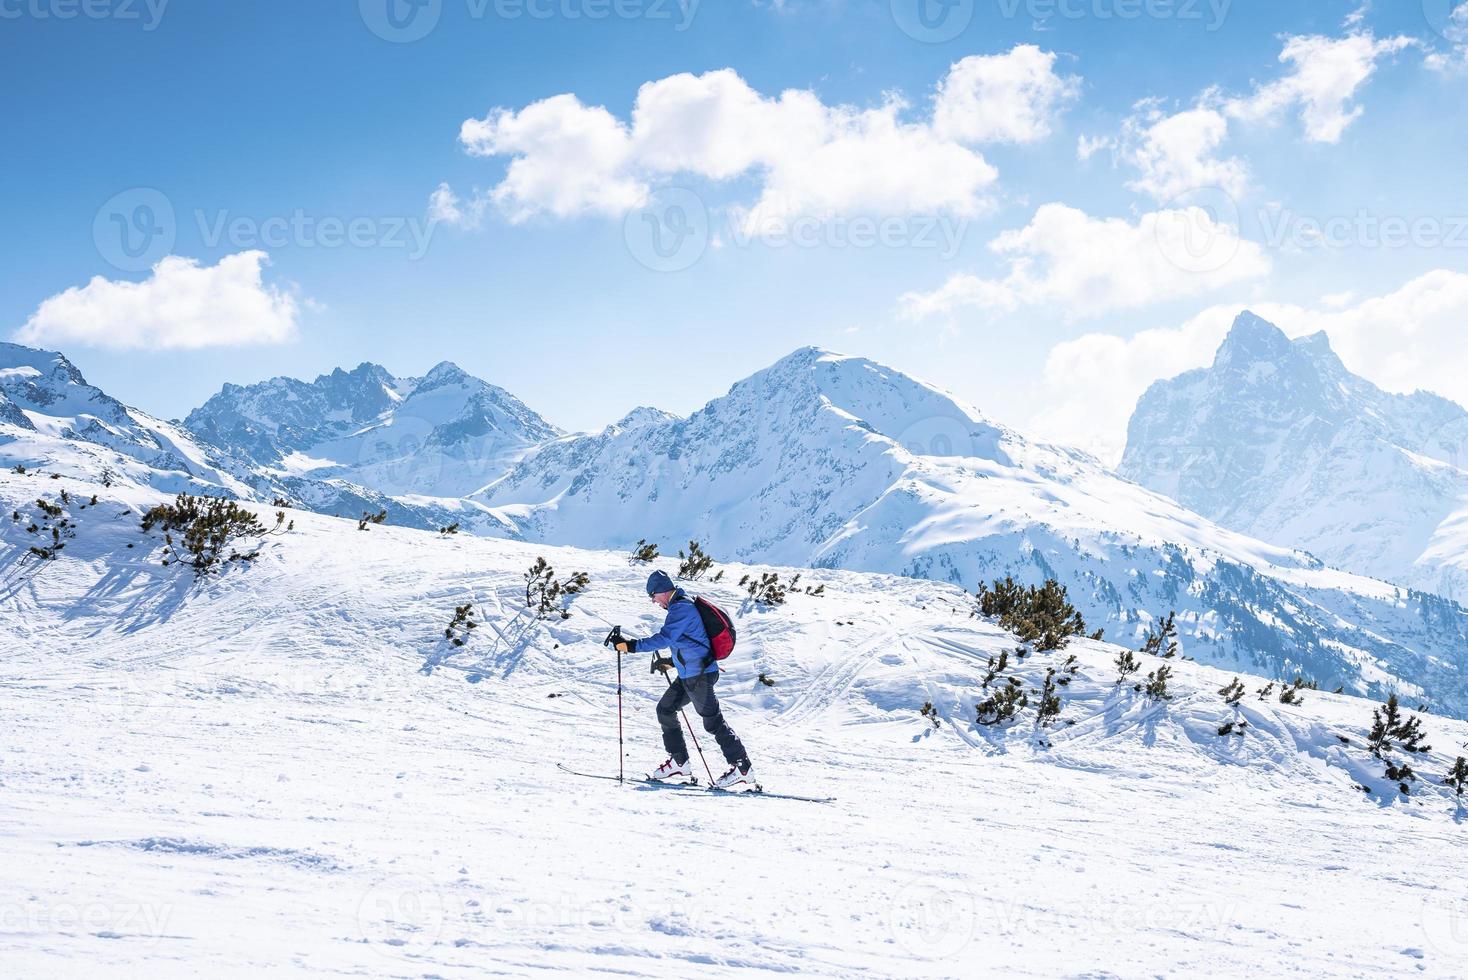 Skier skiing on snowy landscape against mountain range photo